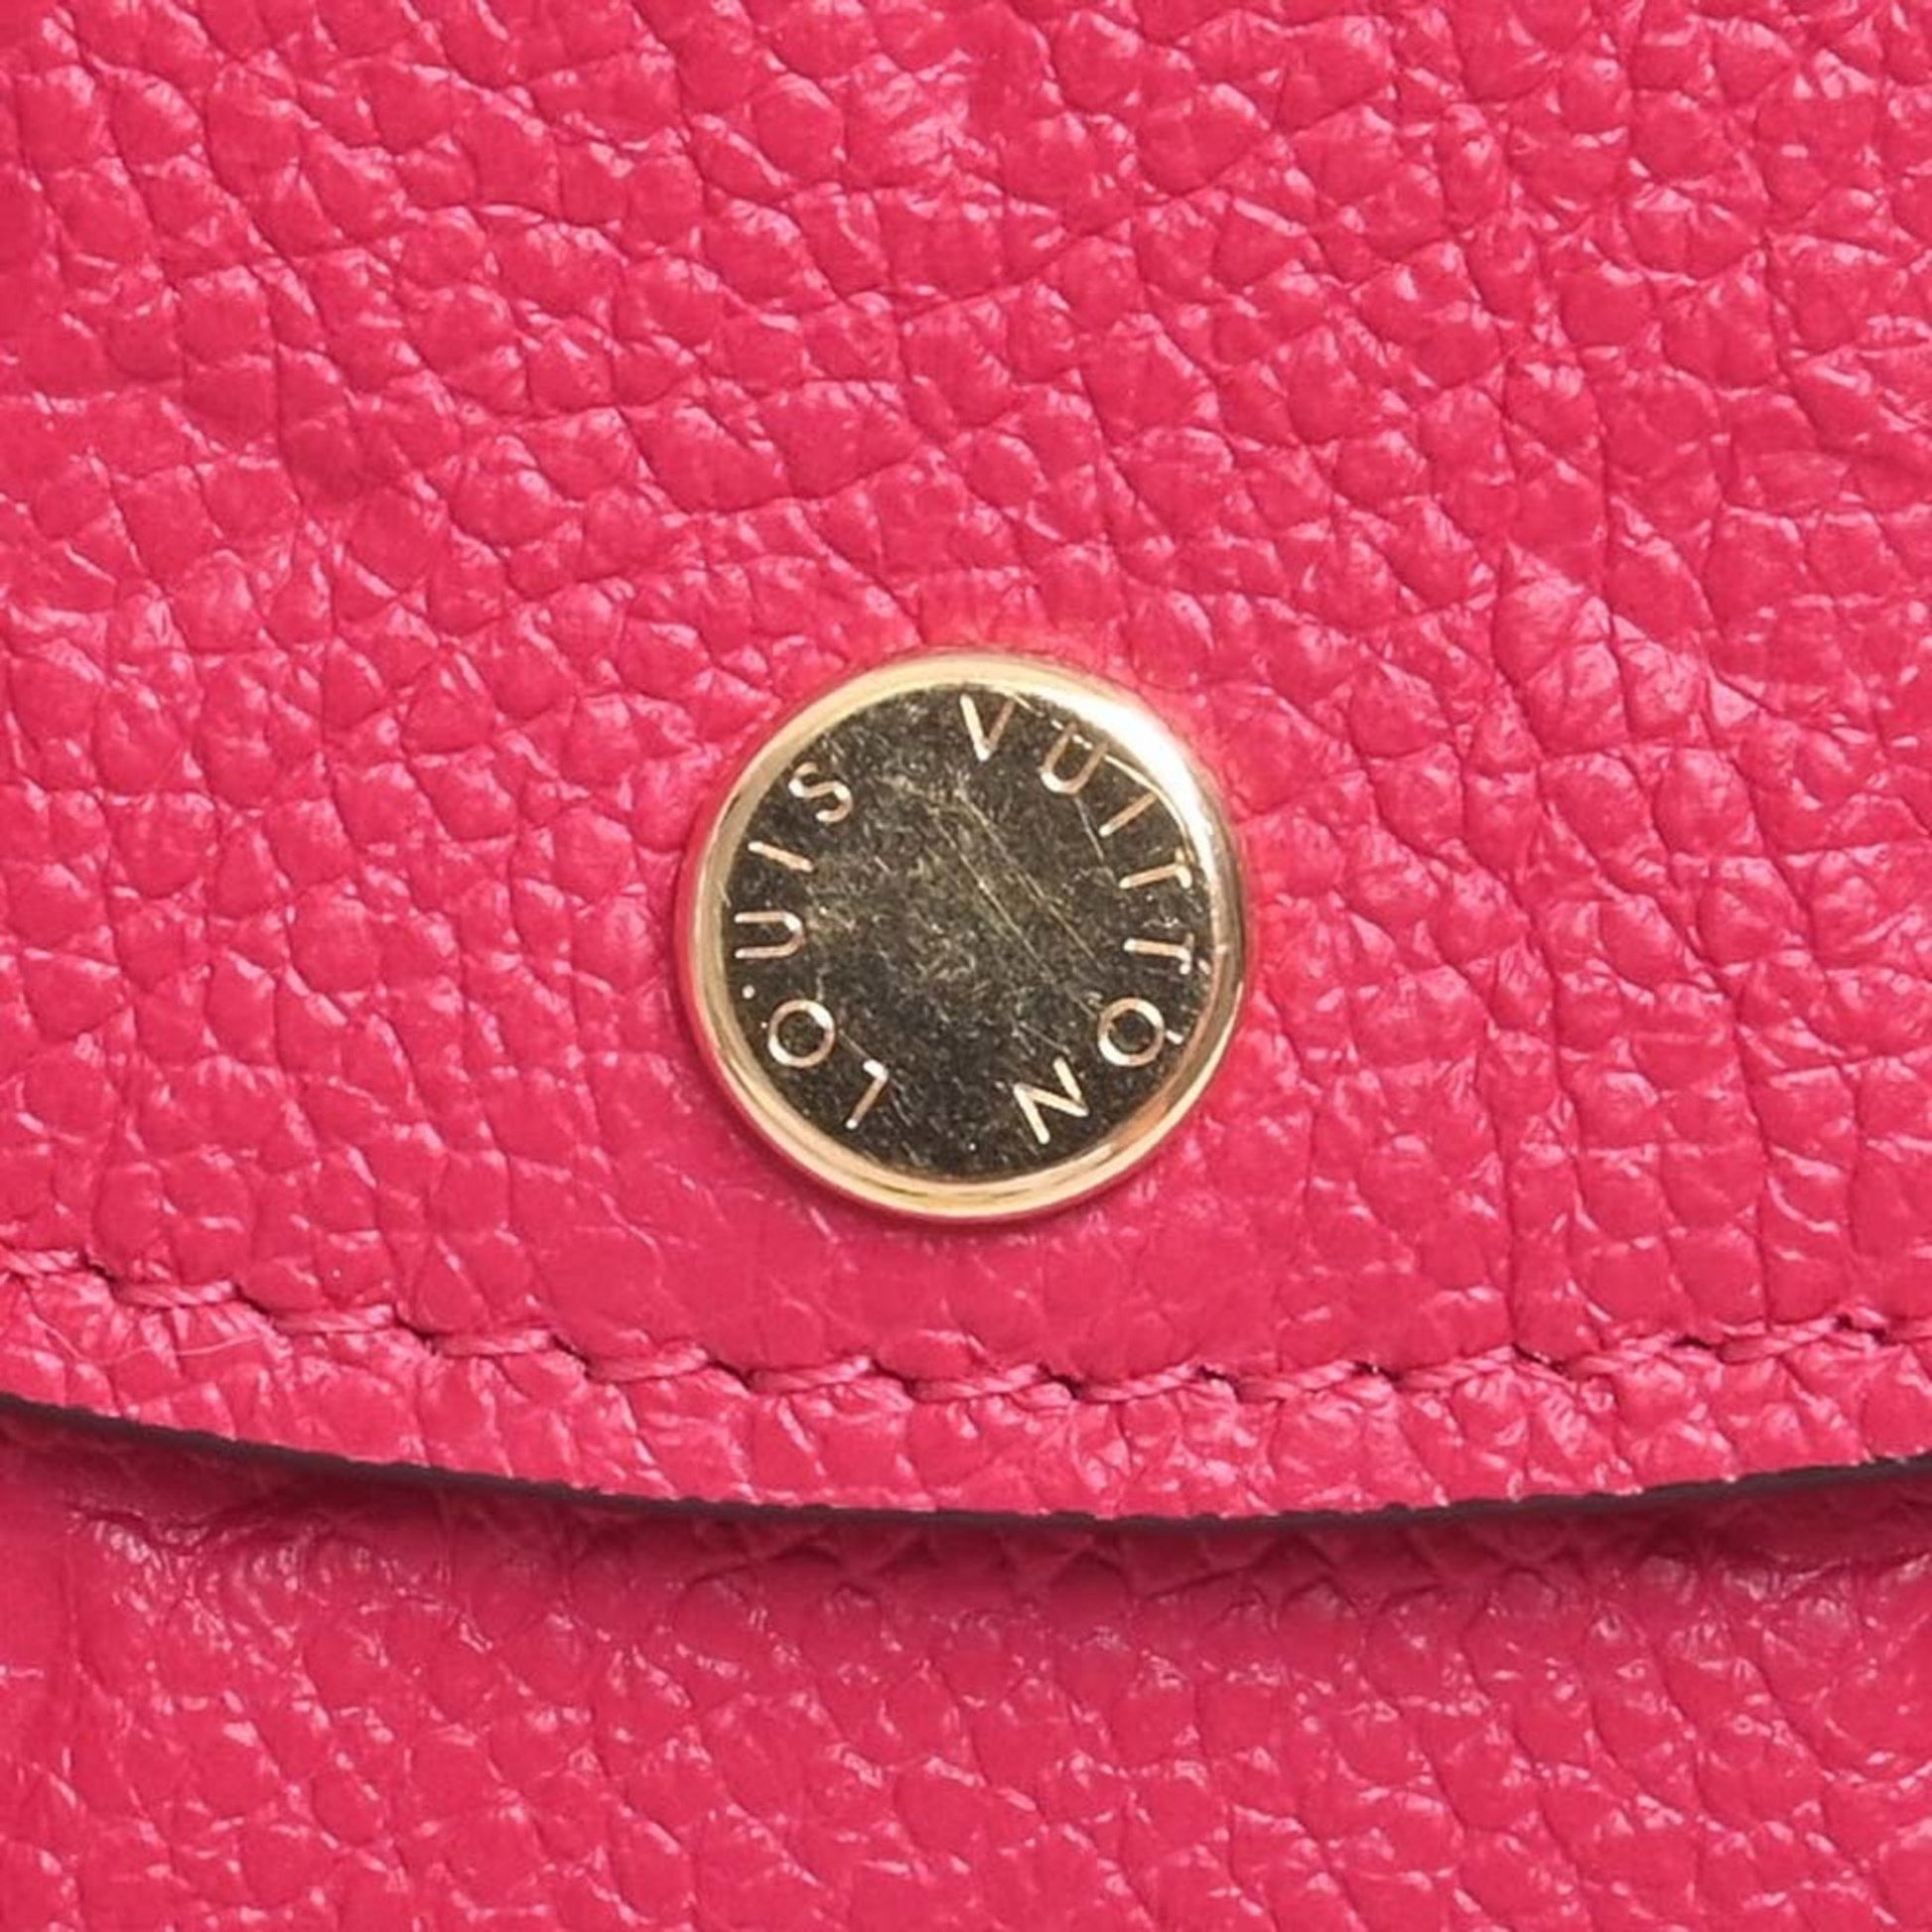 Louis Vuitton Empreinte Portomone Rosali Bifold Coin Case M81521 Pink Ladies